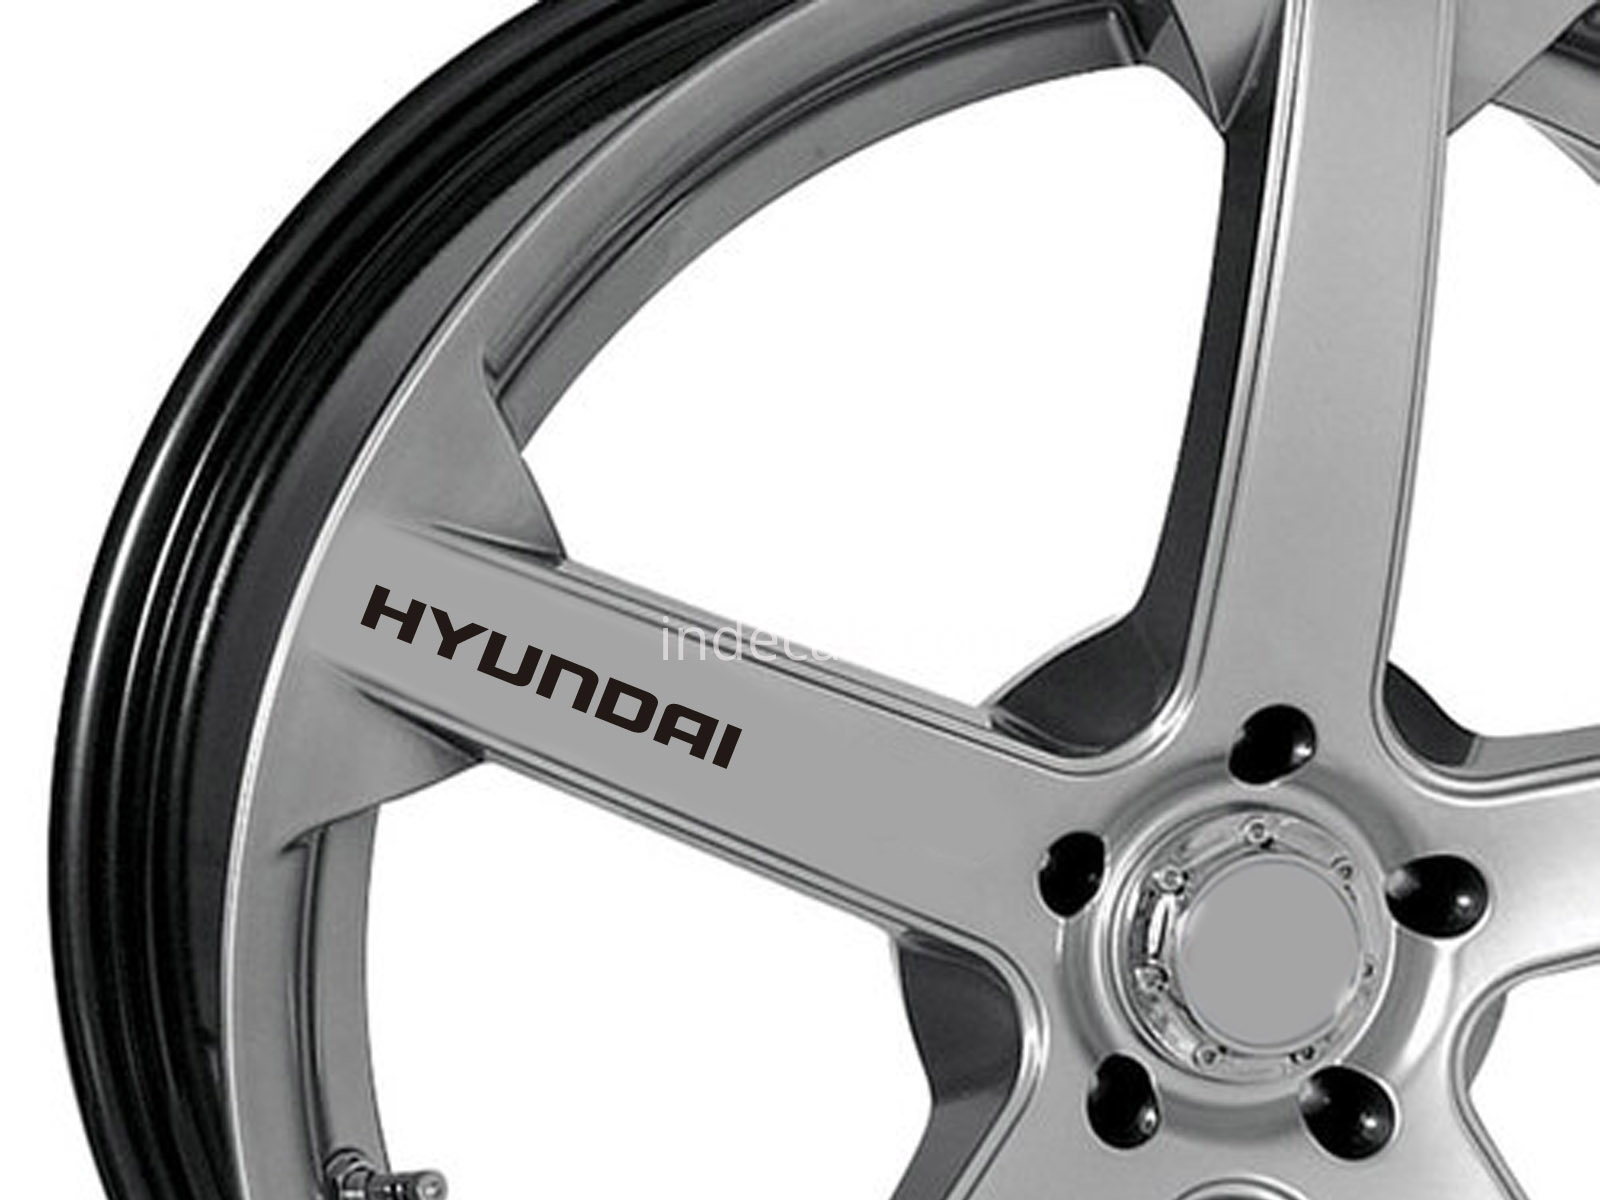 6 x Hyundai Stickers for Wheels - Black